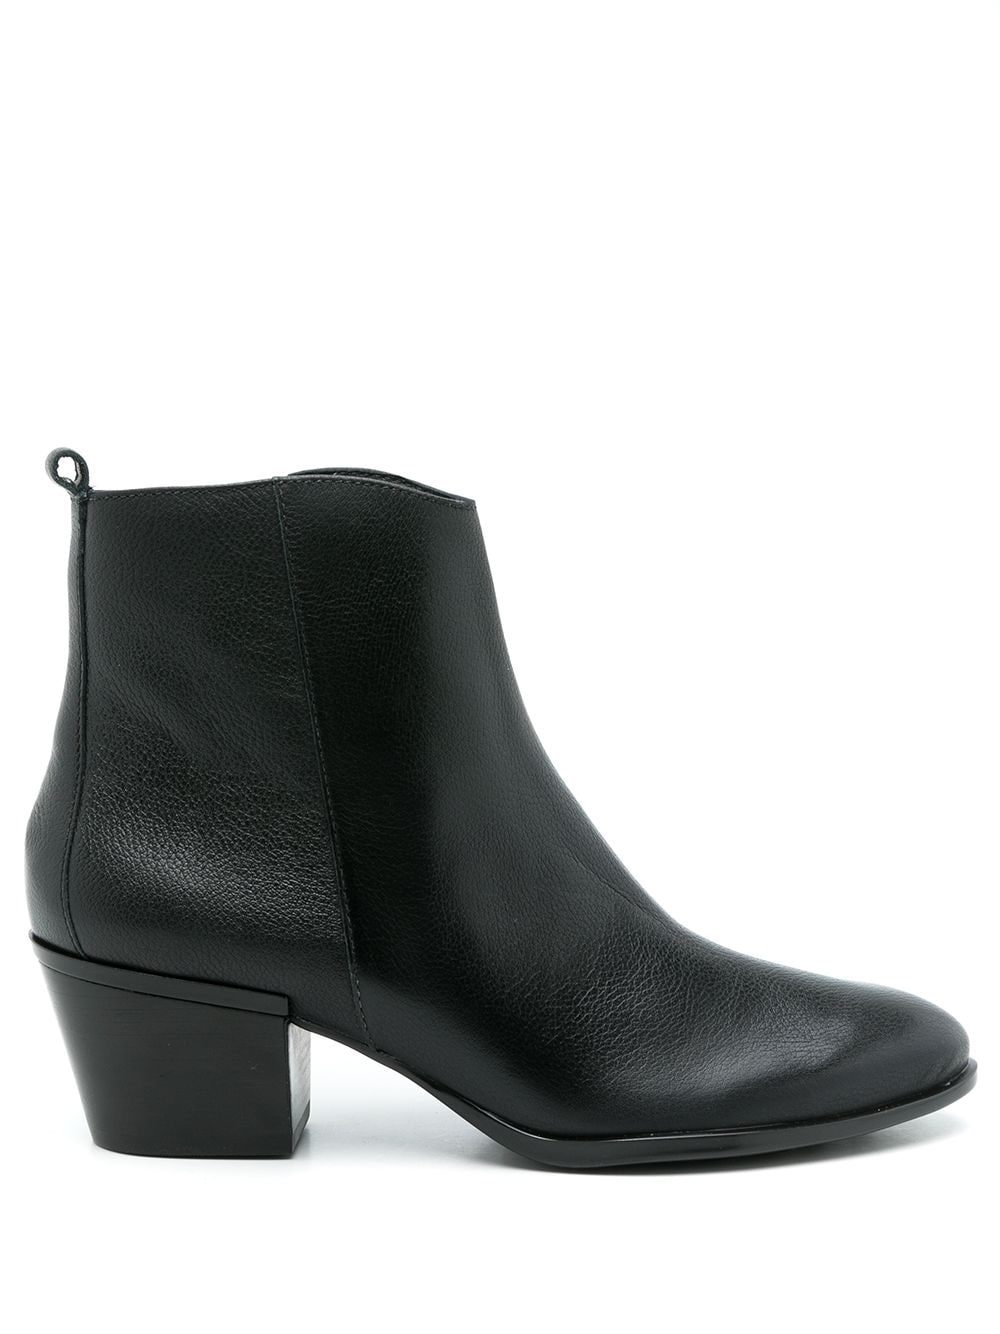 Sarah Chofakian Nicolo leather boots - Black von Sarah Chofakian